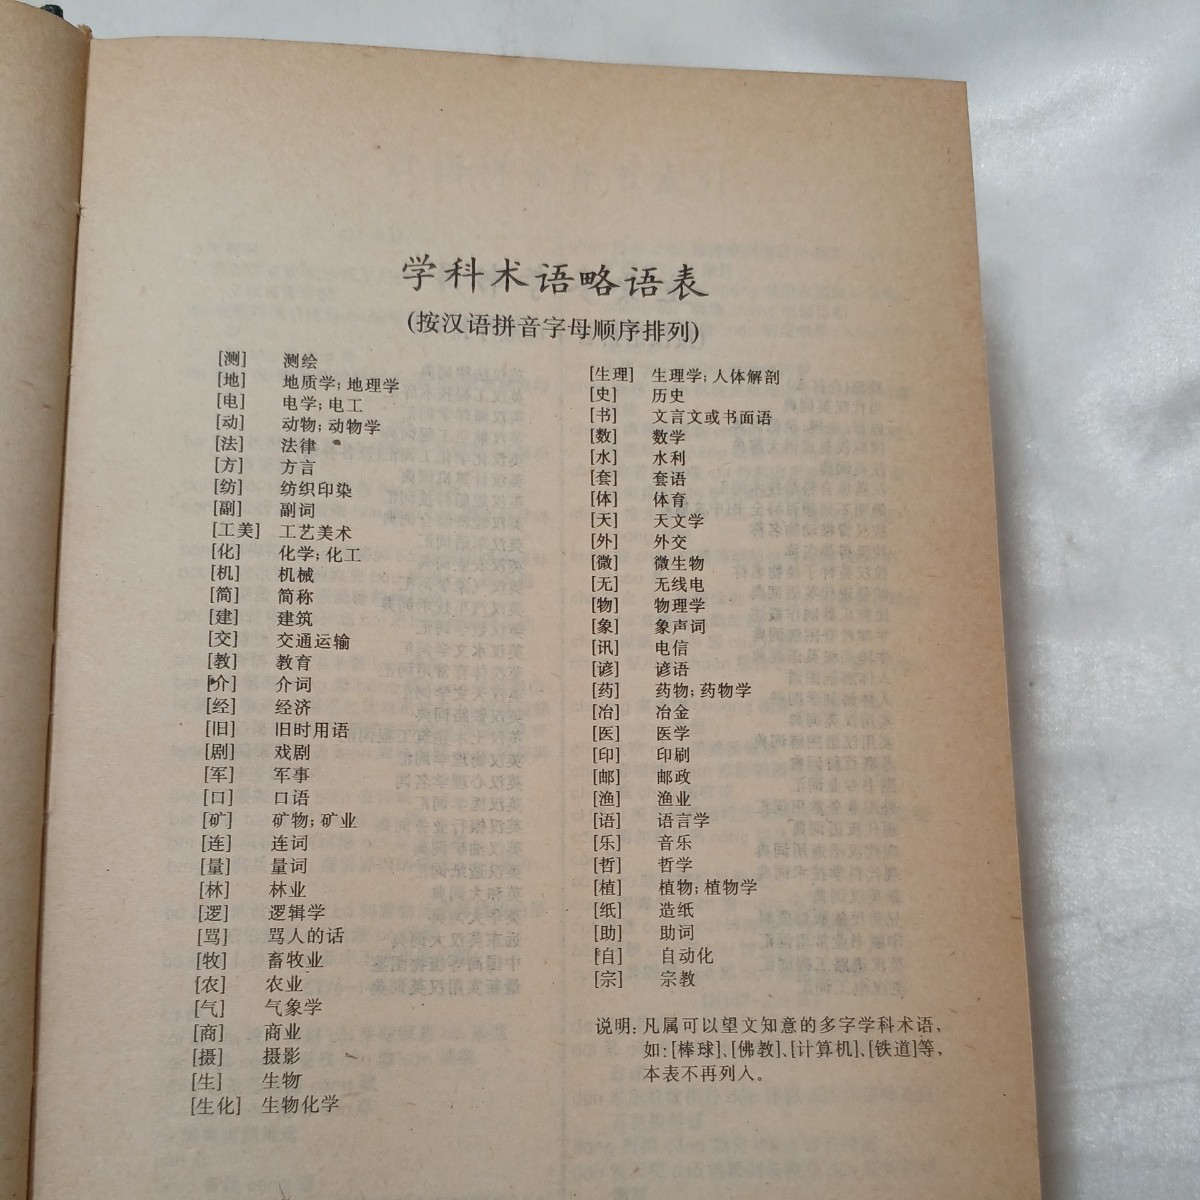 zaa-498♪現代英伺典 A Moden Chinese-English Dictionary 外研社 (1988年11月)